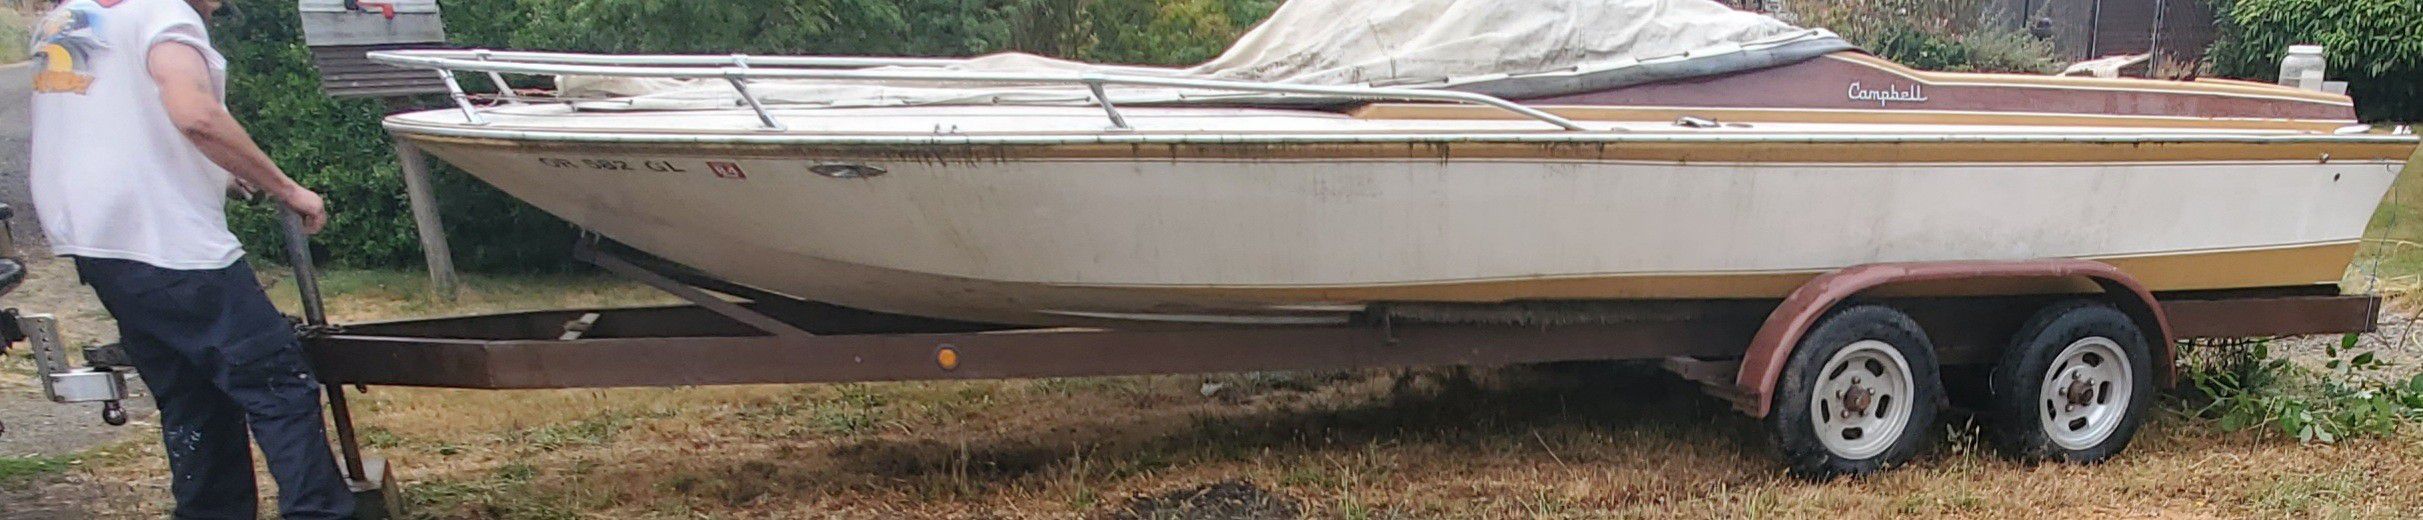 20' low profile boat trailer